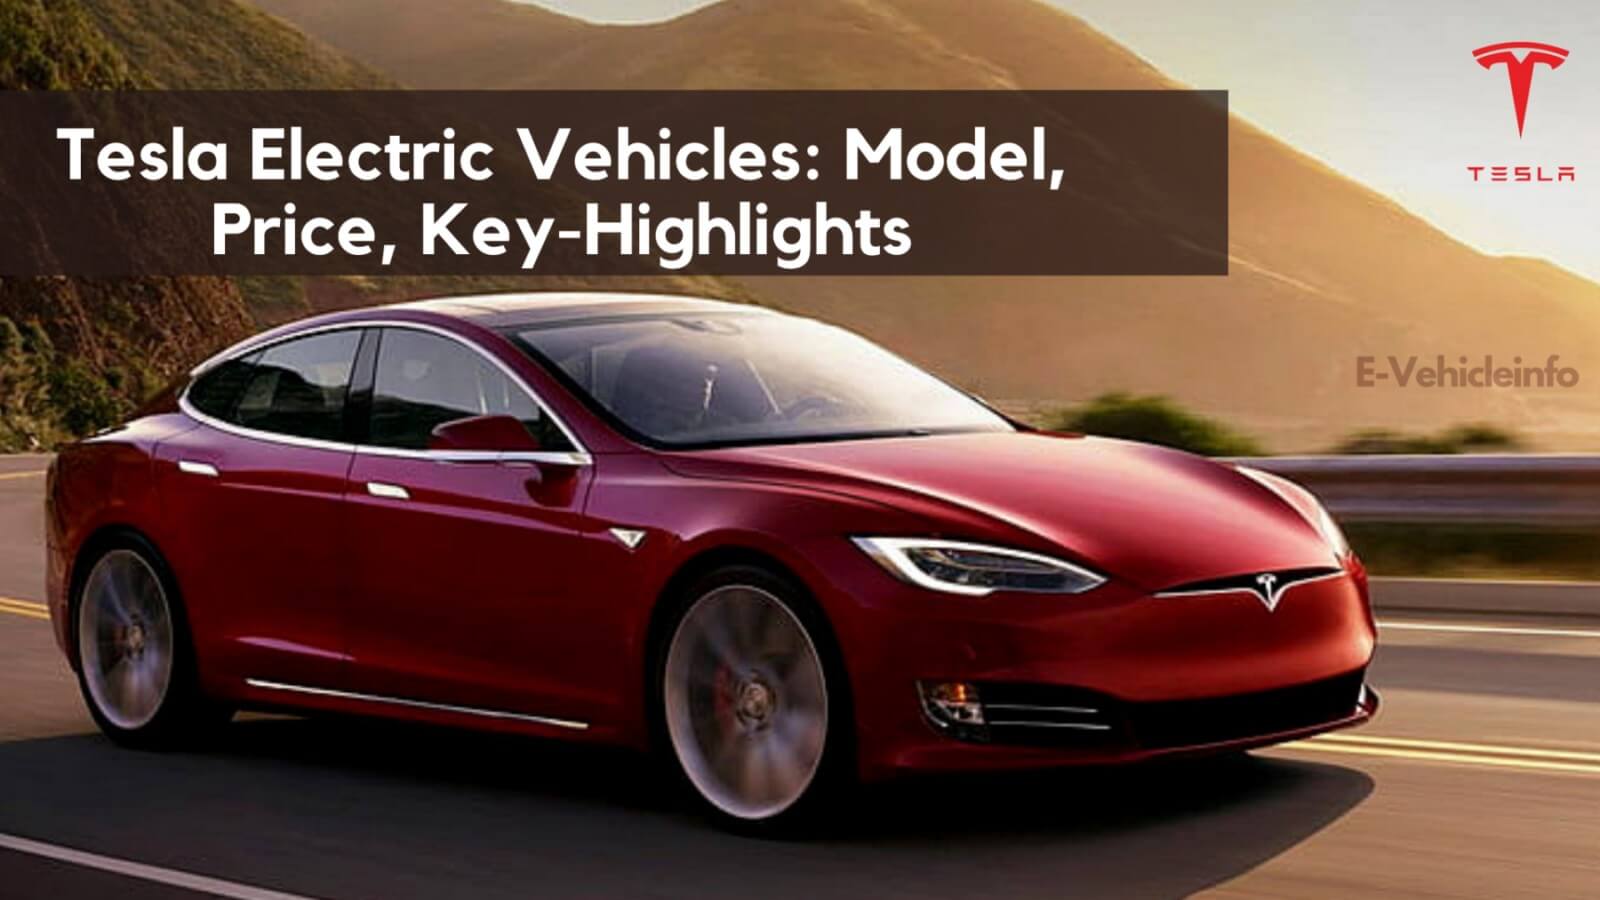 https://e-vehicleinfo.com/tesla-electric-vehicles-model-price-key-highlights/